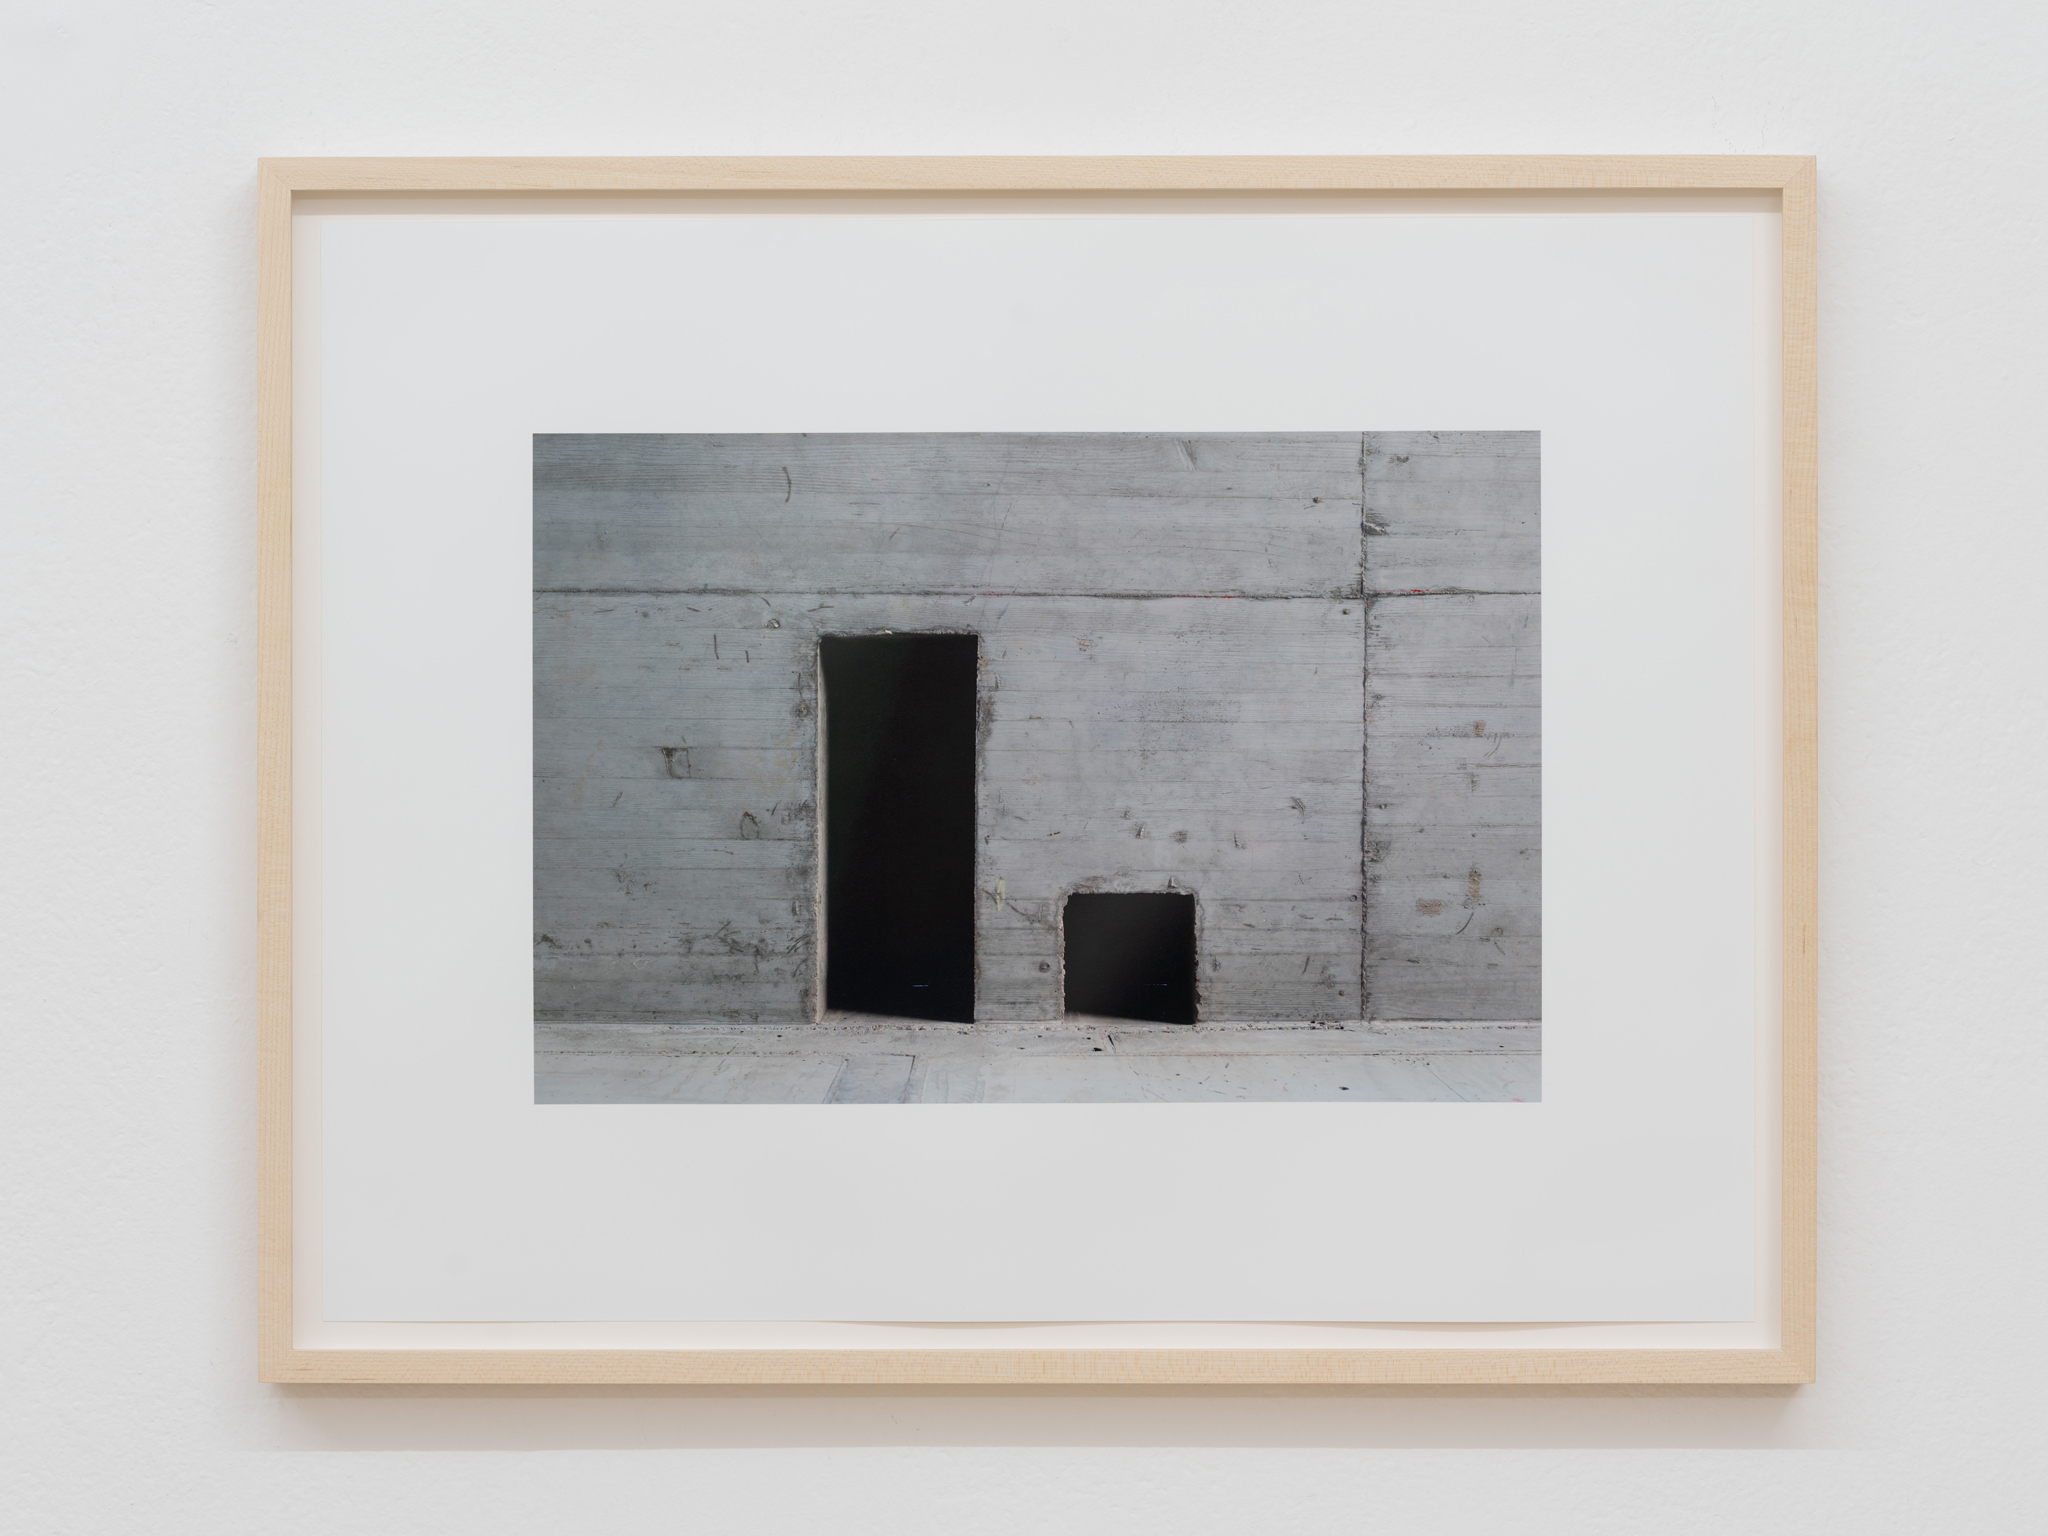 Heinz Peter Knes, Ausrichtung (2015), inkjet print, 41,3 x 53,8 cm, Ed. 3 + 2 AP